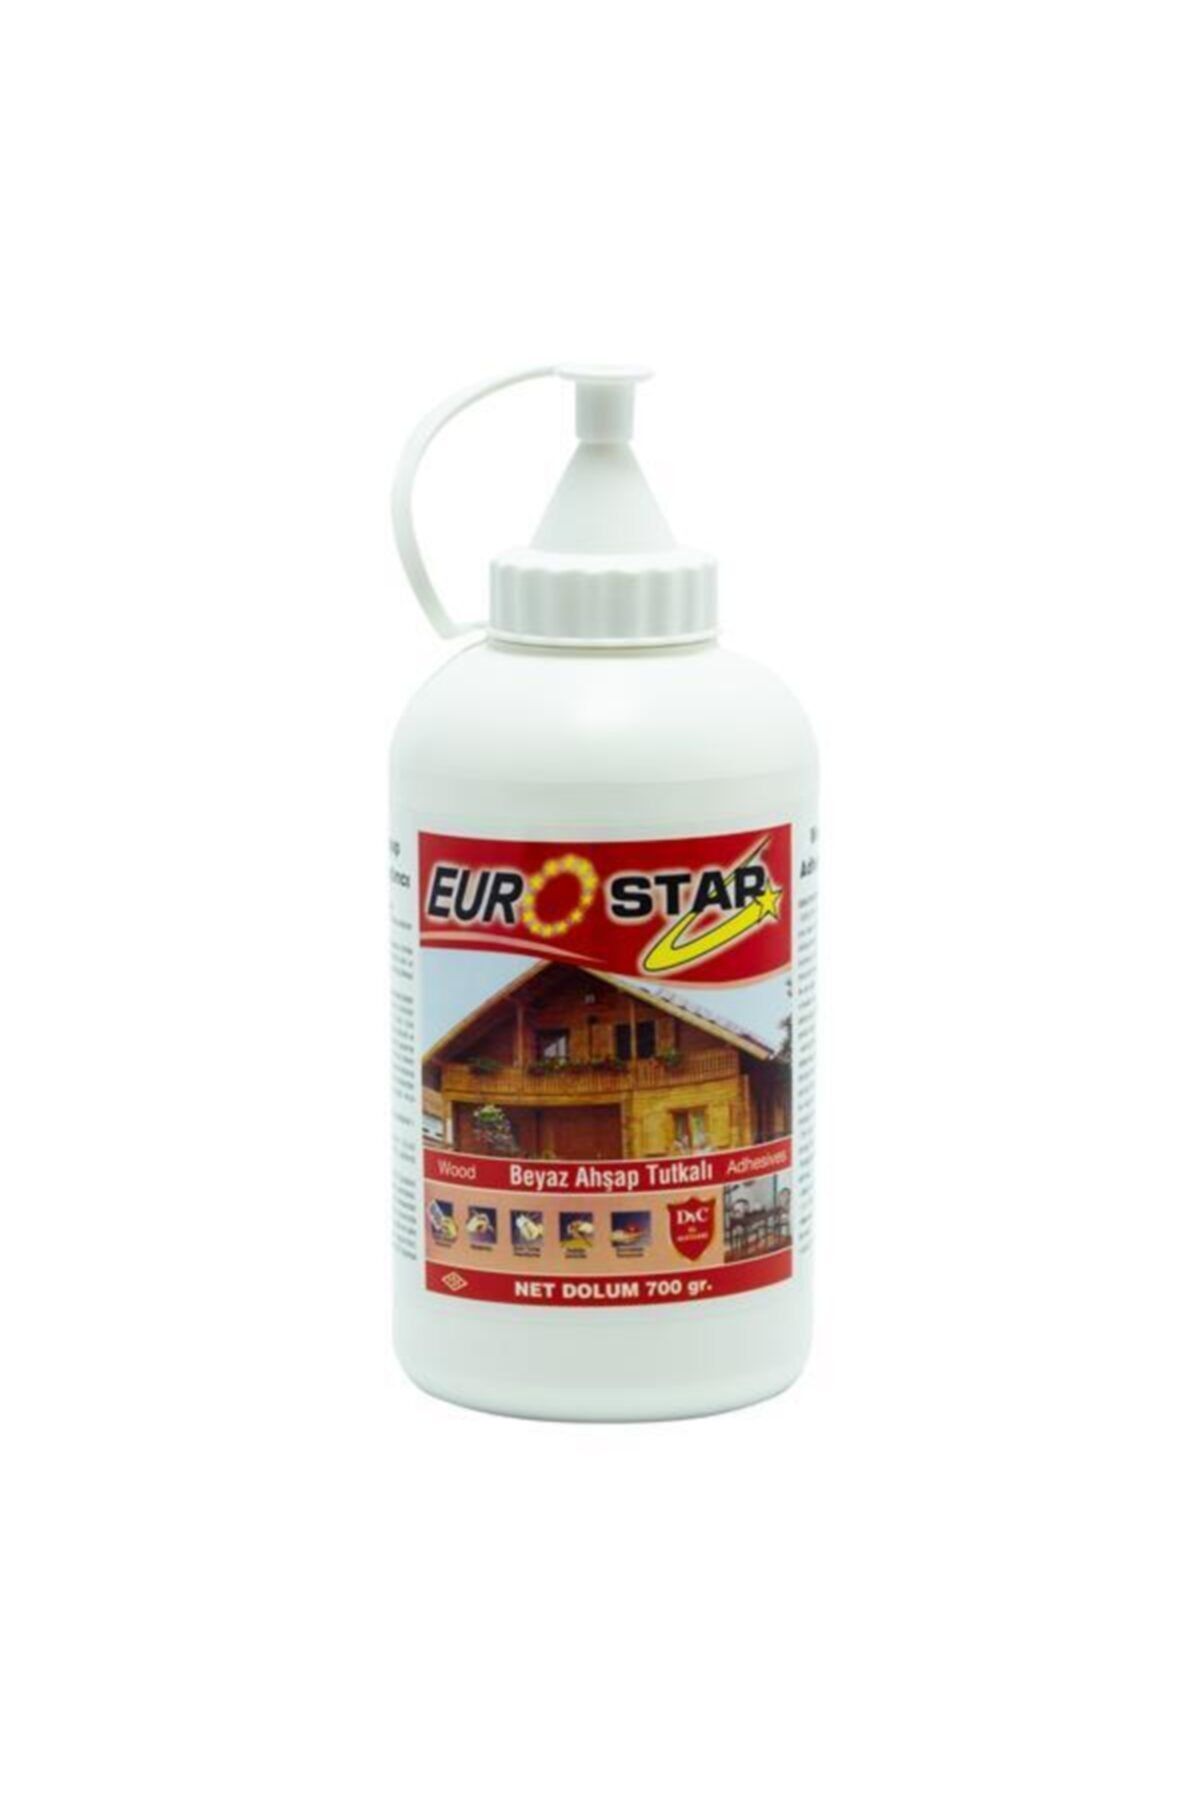 EuroStar Euro Star Beyaz Ahşap Tutkalı 700gr